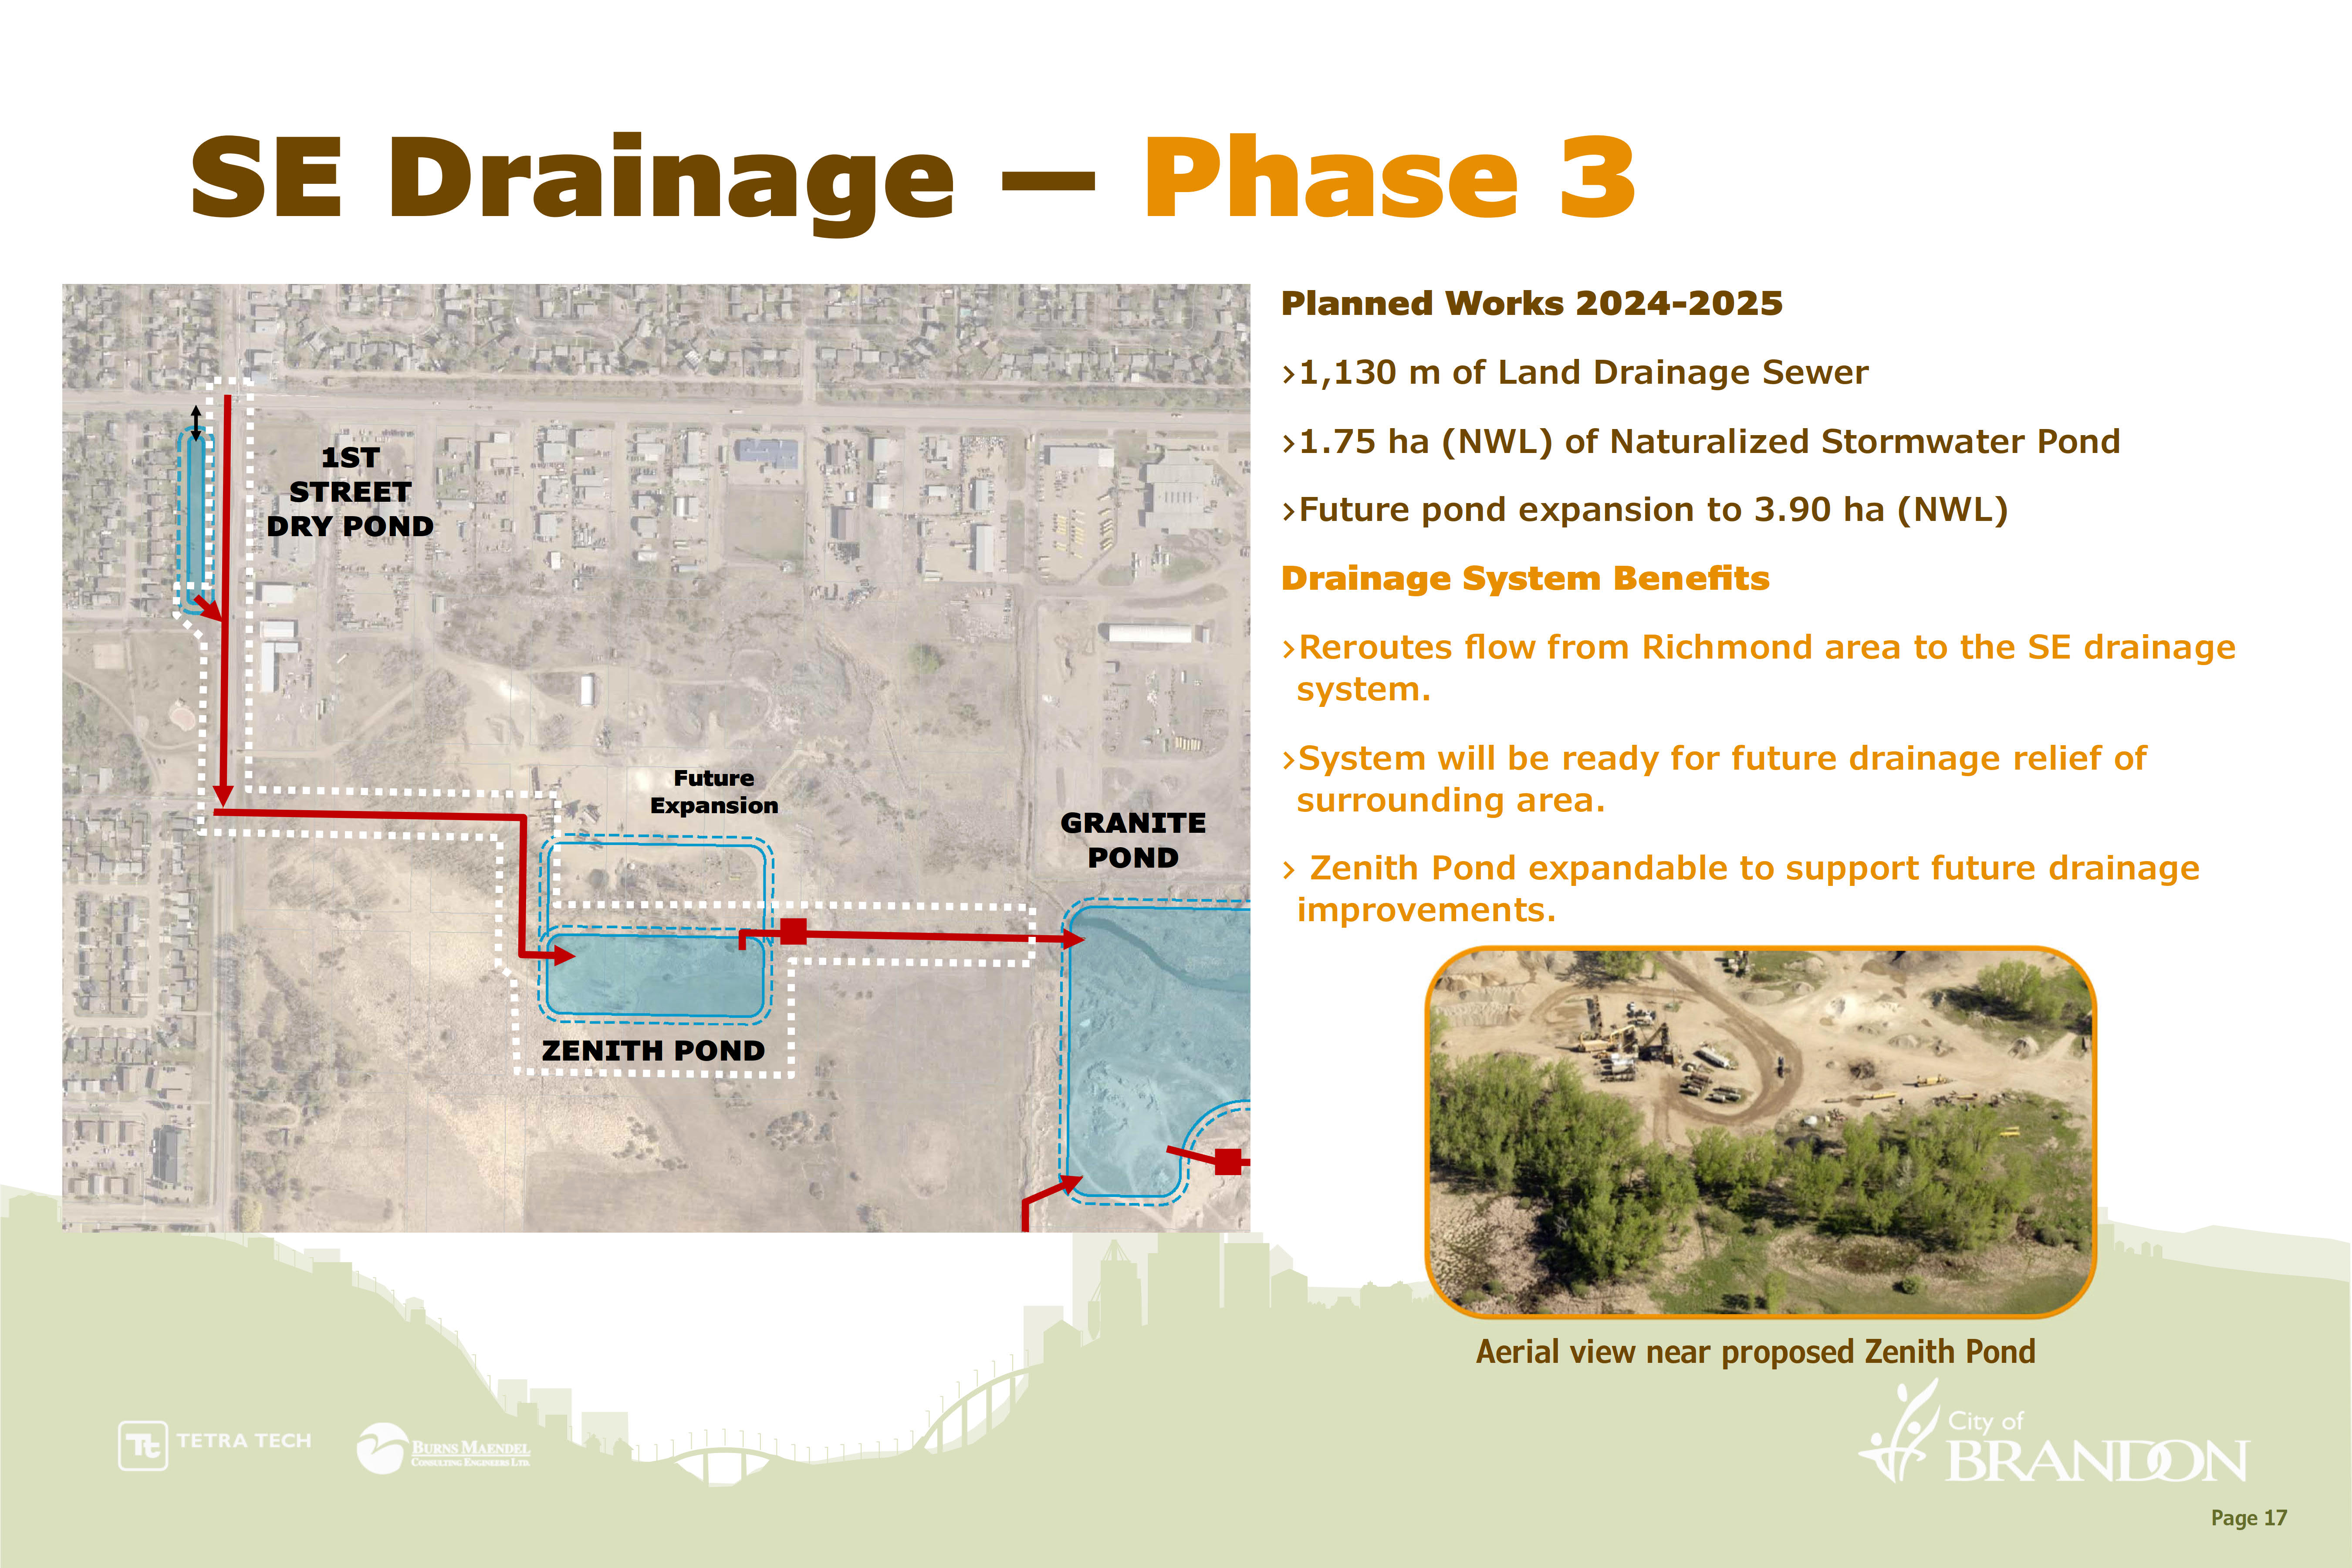 Southeast Drainage - Phase 3